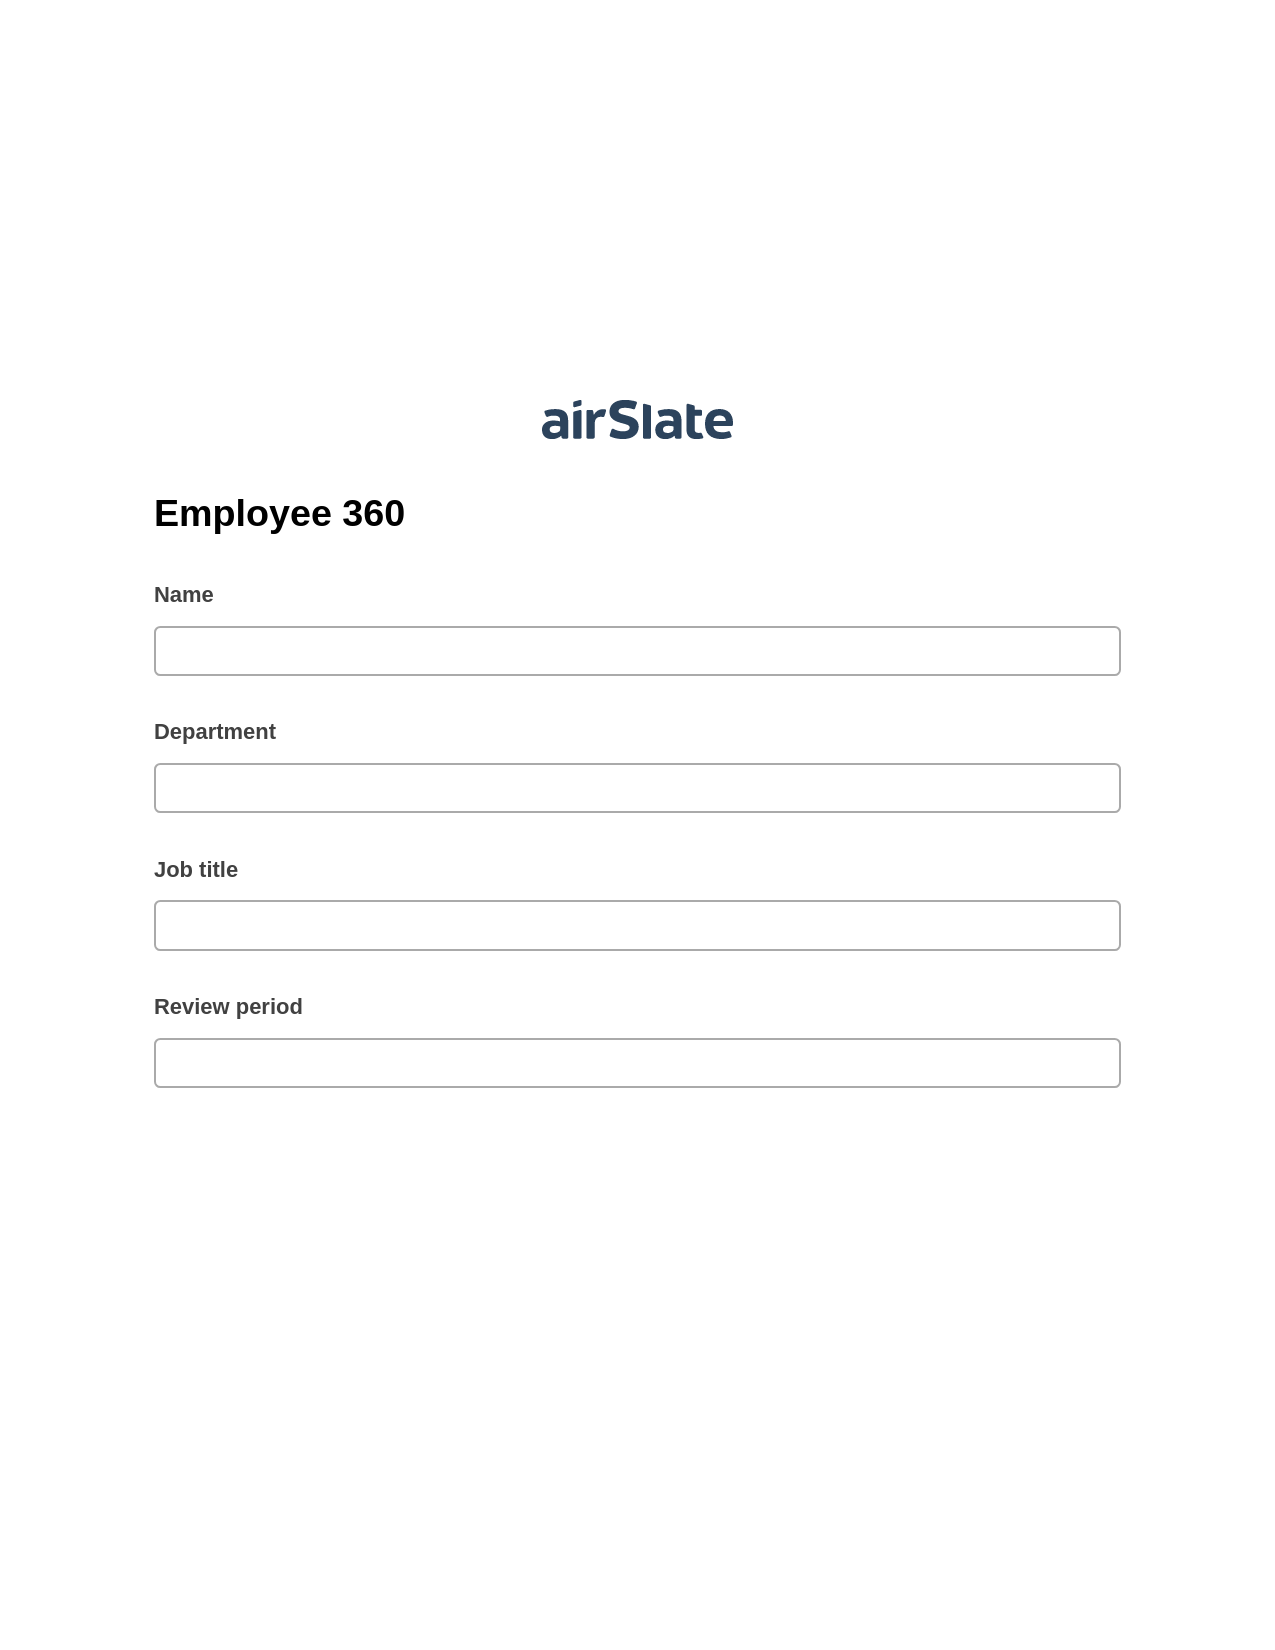 Multirole Employee 360 Pre-fill from Excel Spreadsheet Bot, Invoke Salesforce Process Bot, Archive to Box Bot